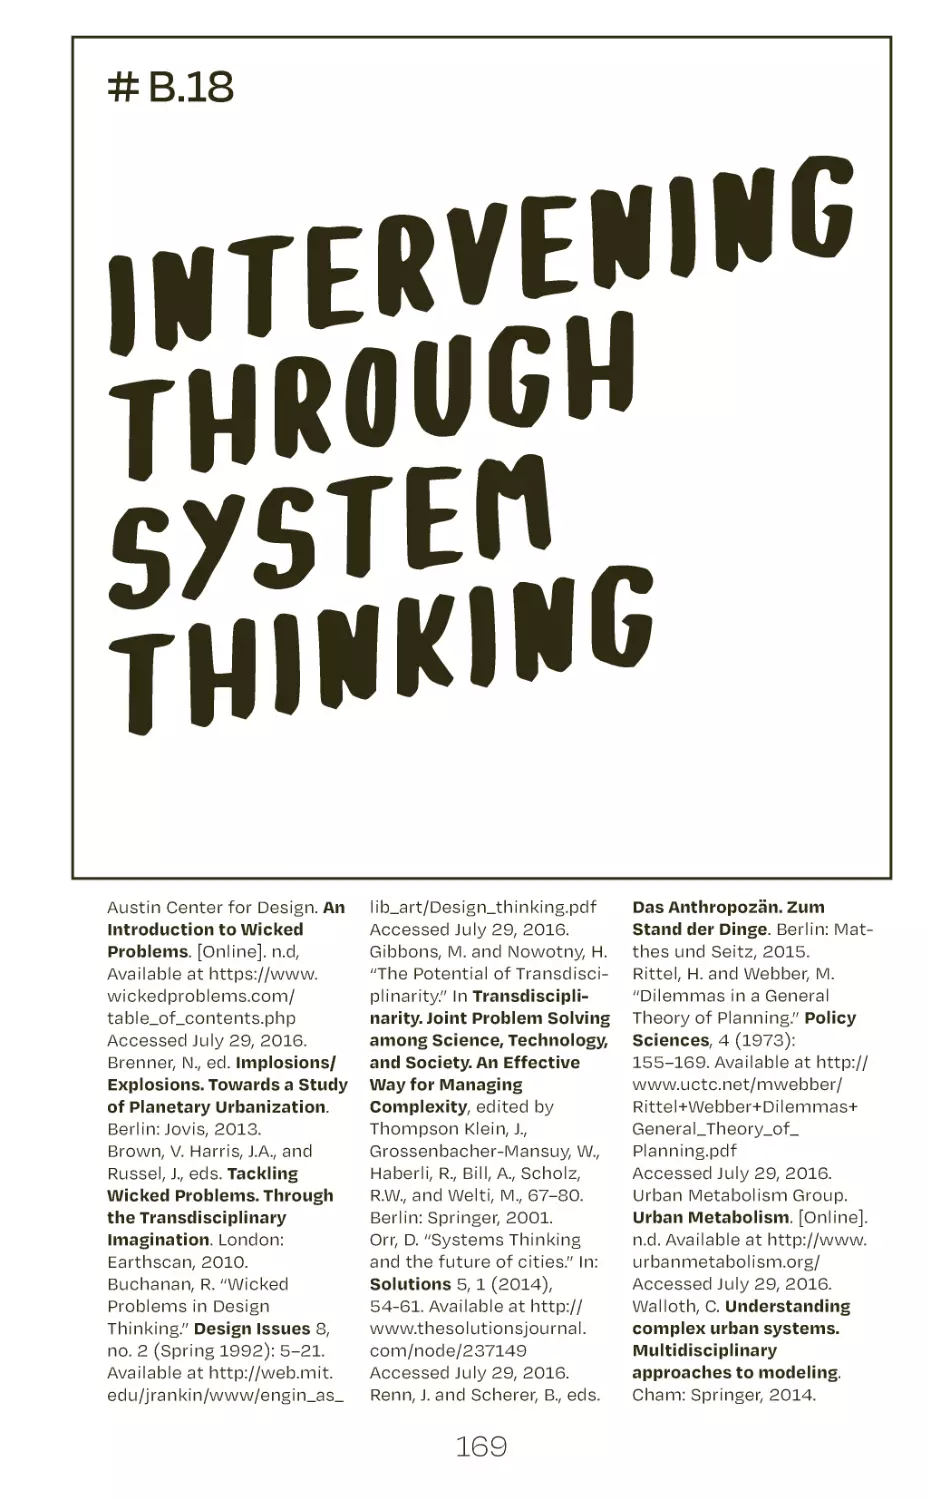 # B.18 intervening through system thinking